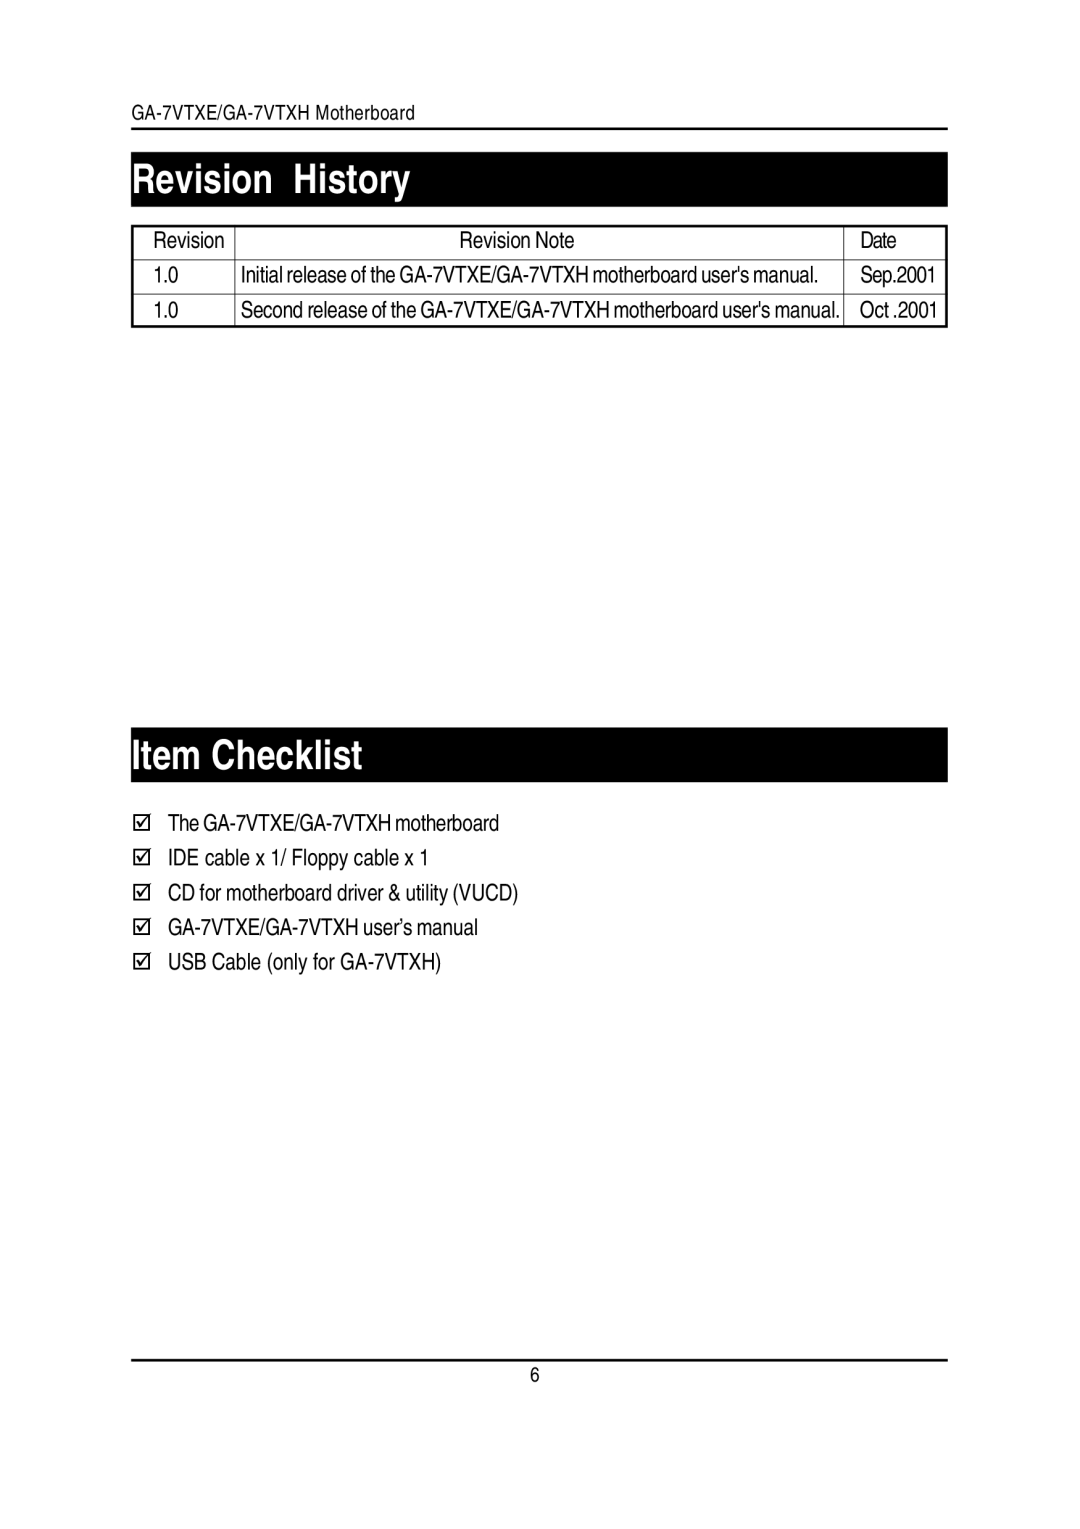 Gigabyte GA-7VTXE, GA-7VTXH warranty Item Checklist, Revision Note Date 